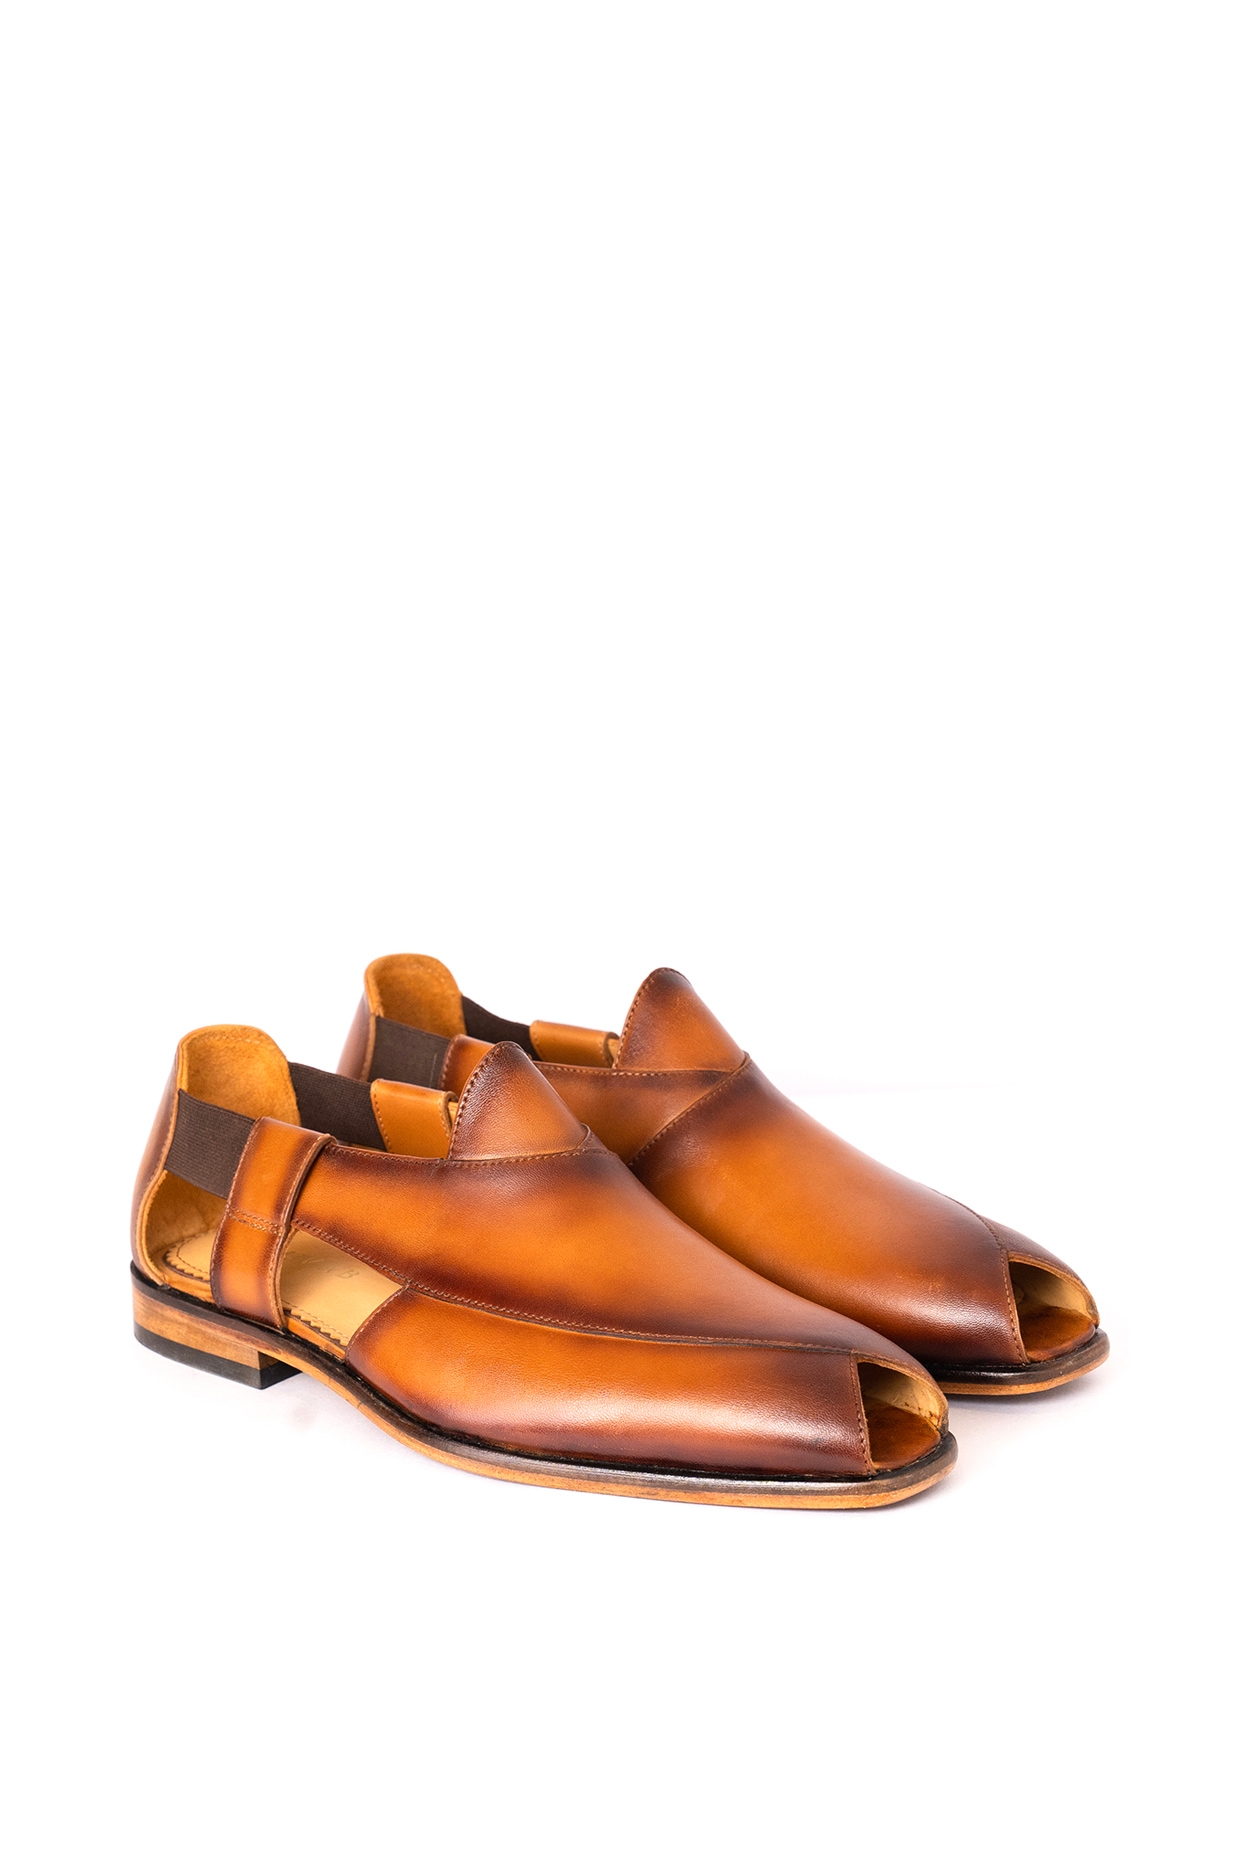 Brown Leather Peshawari Sandals Design by Nauvab at Pernia's Pop Up Shop  2024